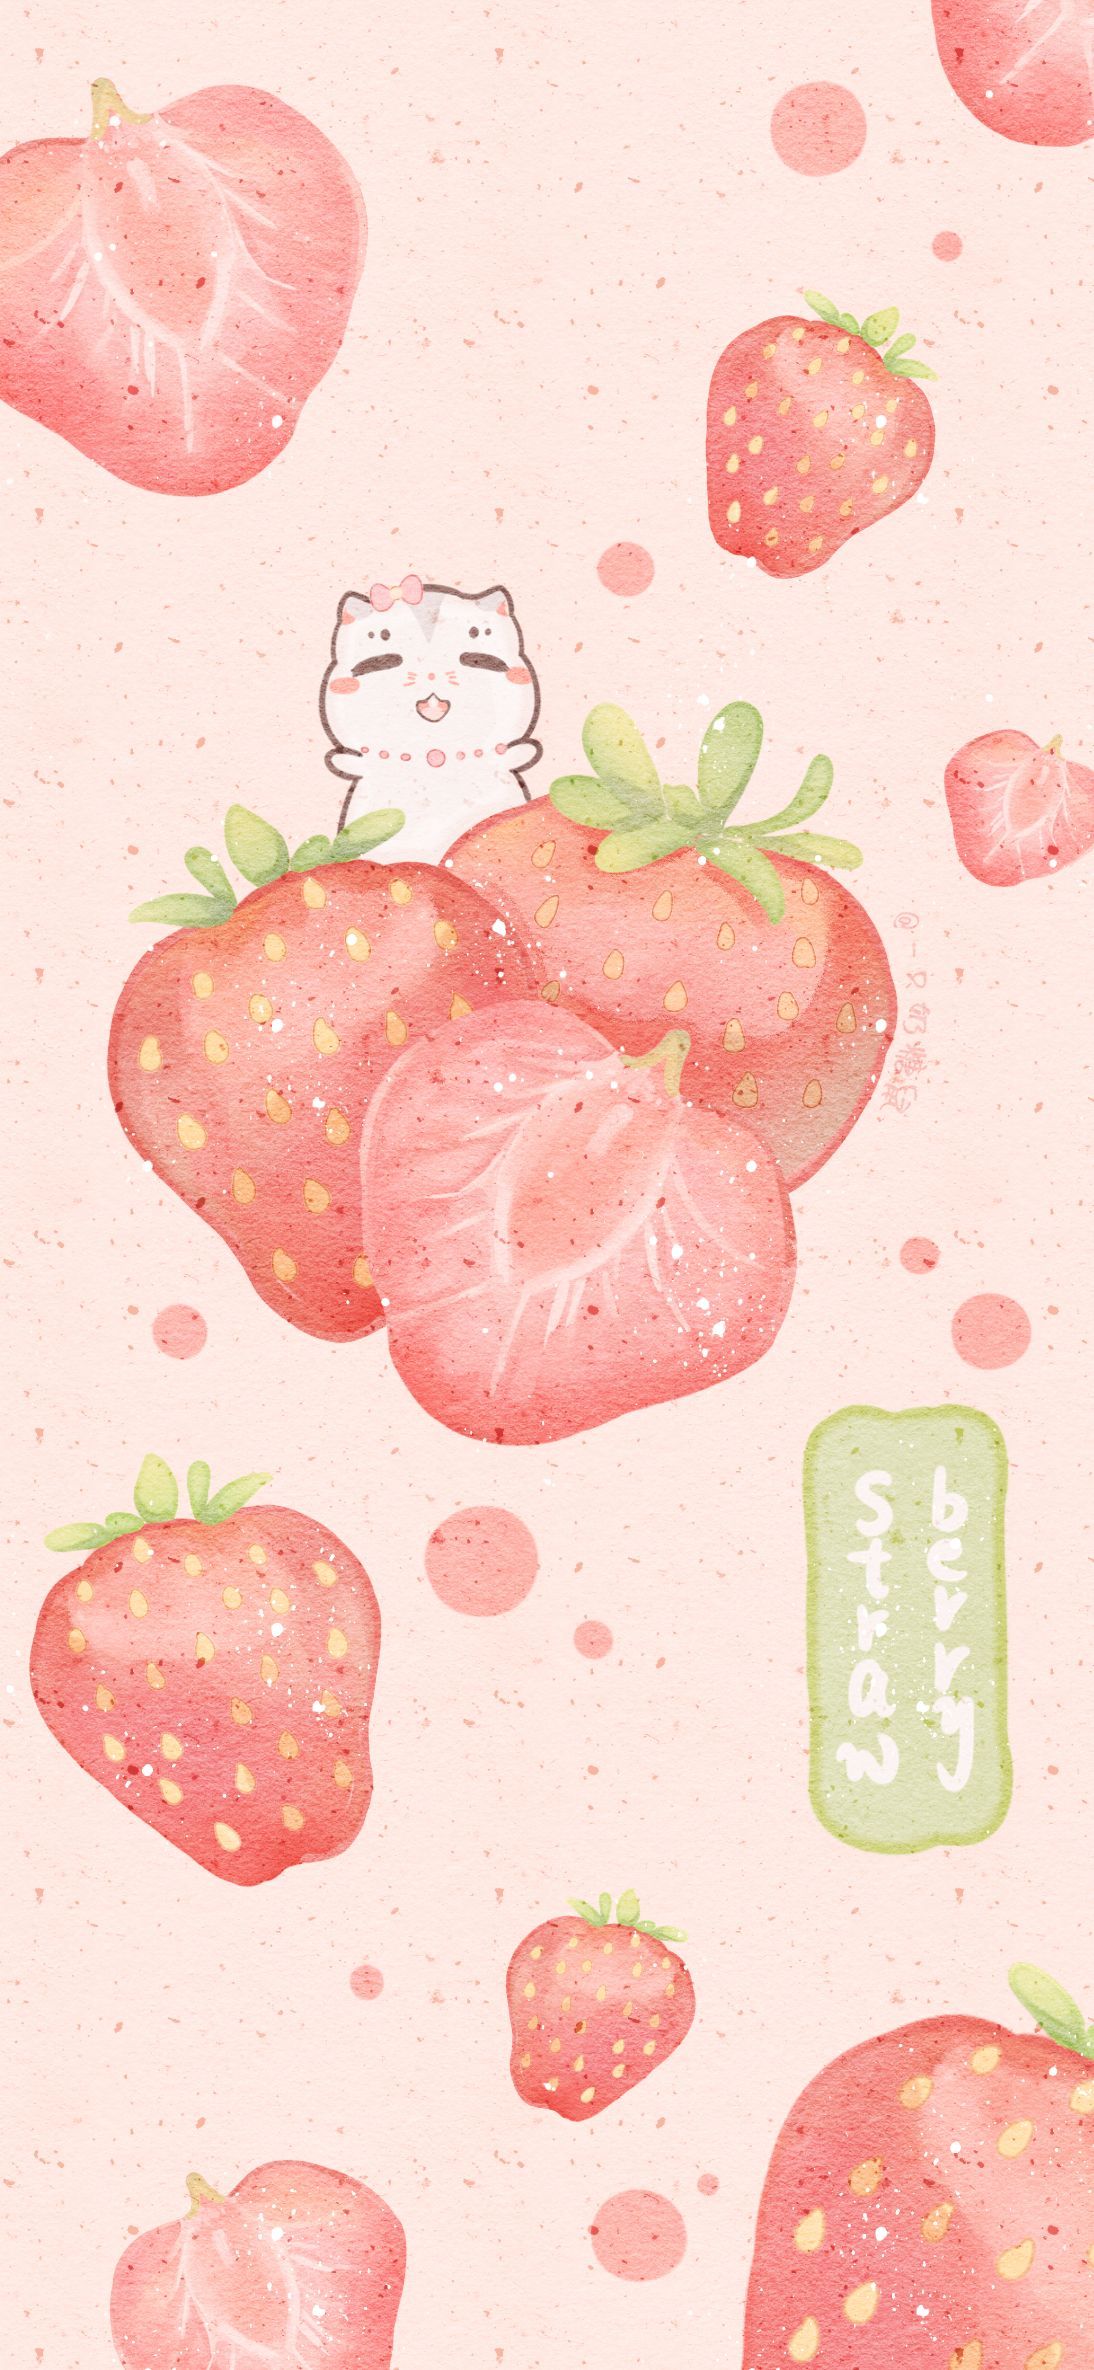 source: 一只奶糖鼠// weibo. Fruit wallpaper, Wallpaper iphone cute, Cute pastel wallpaper